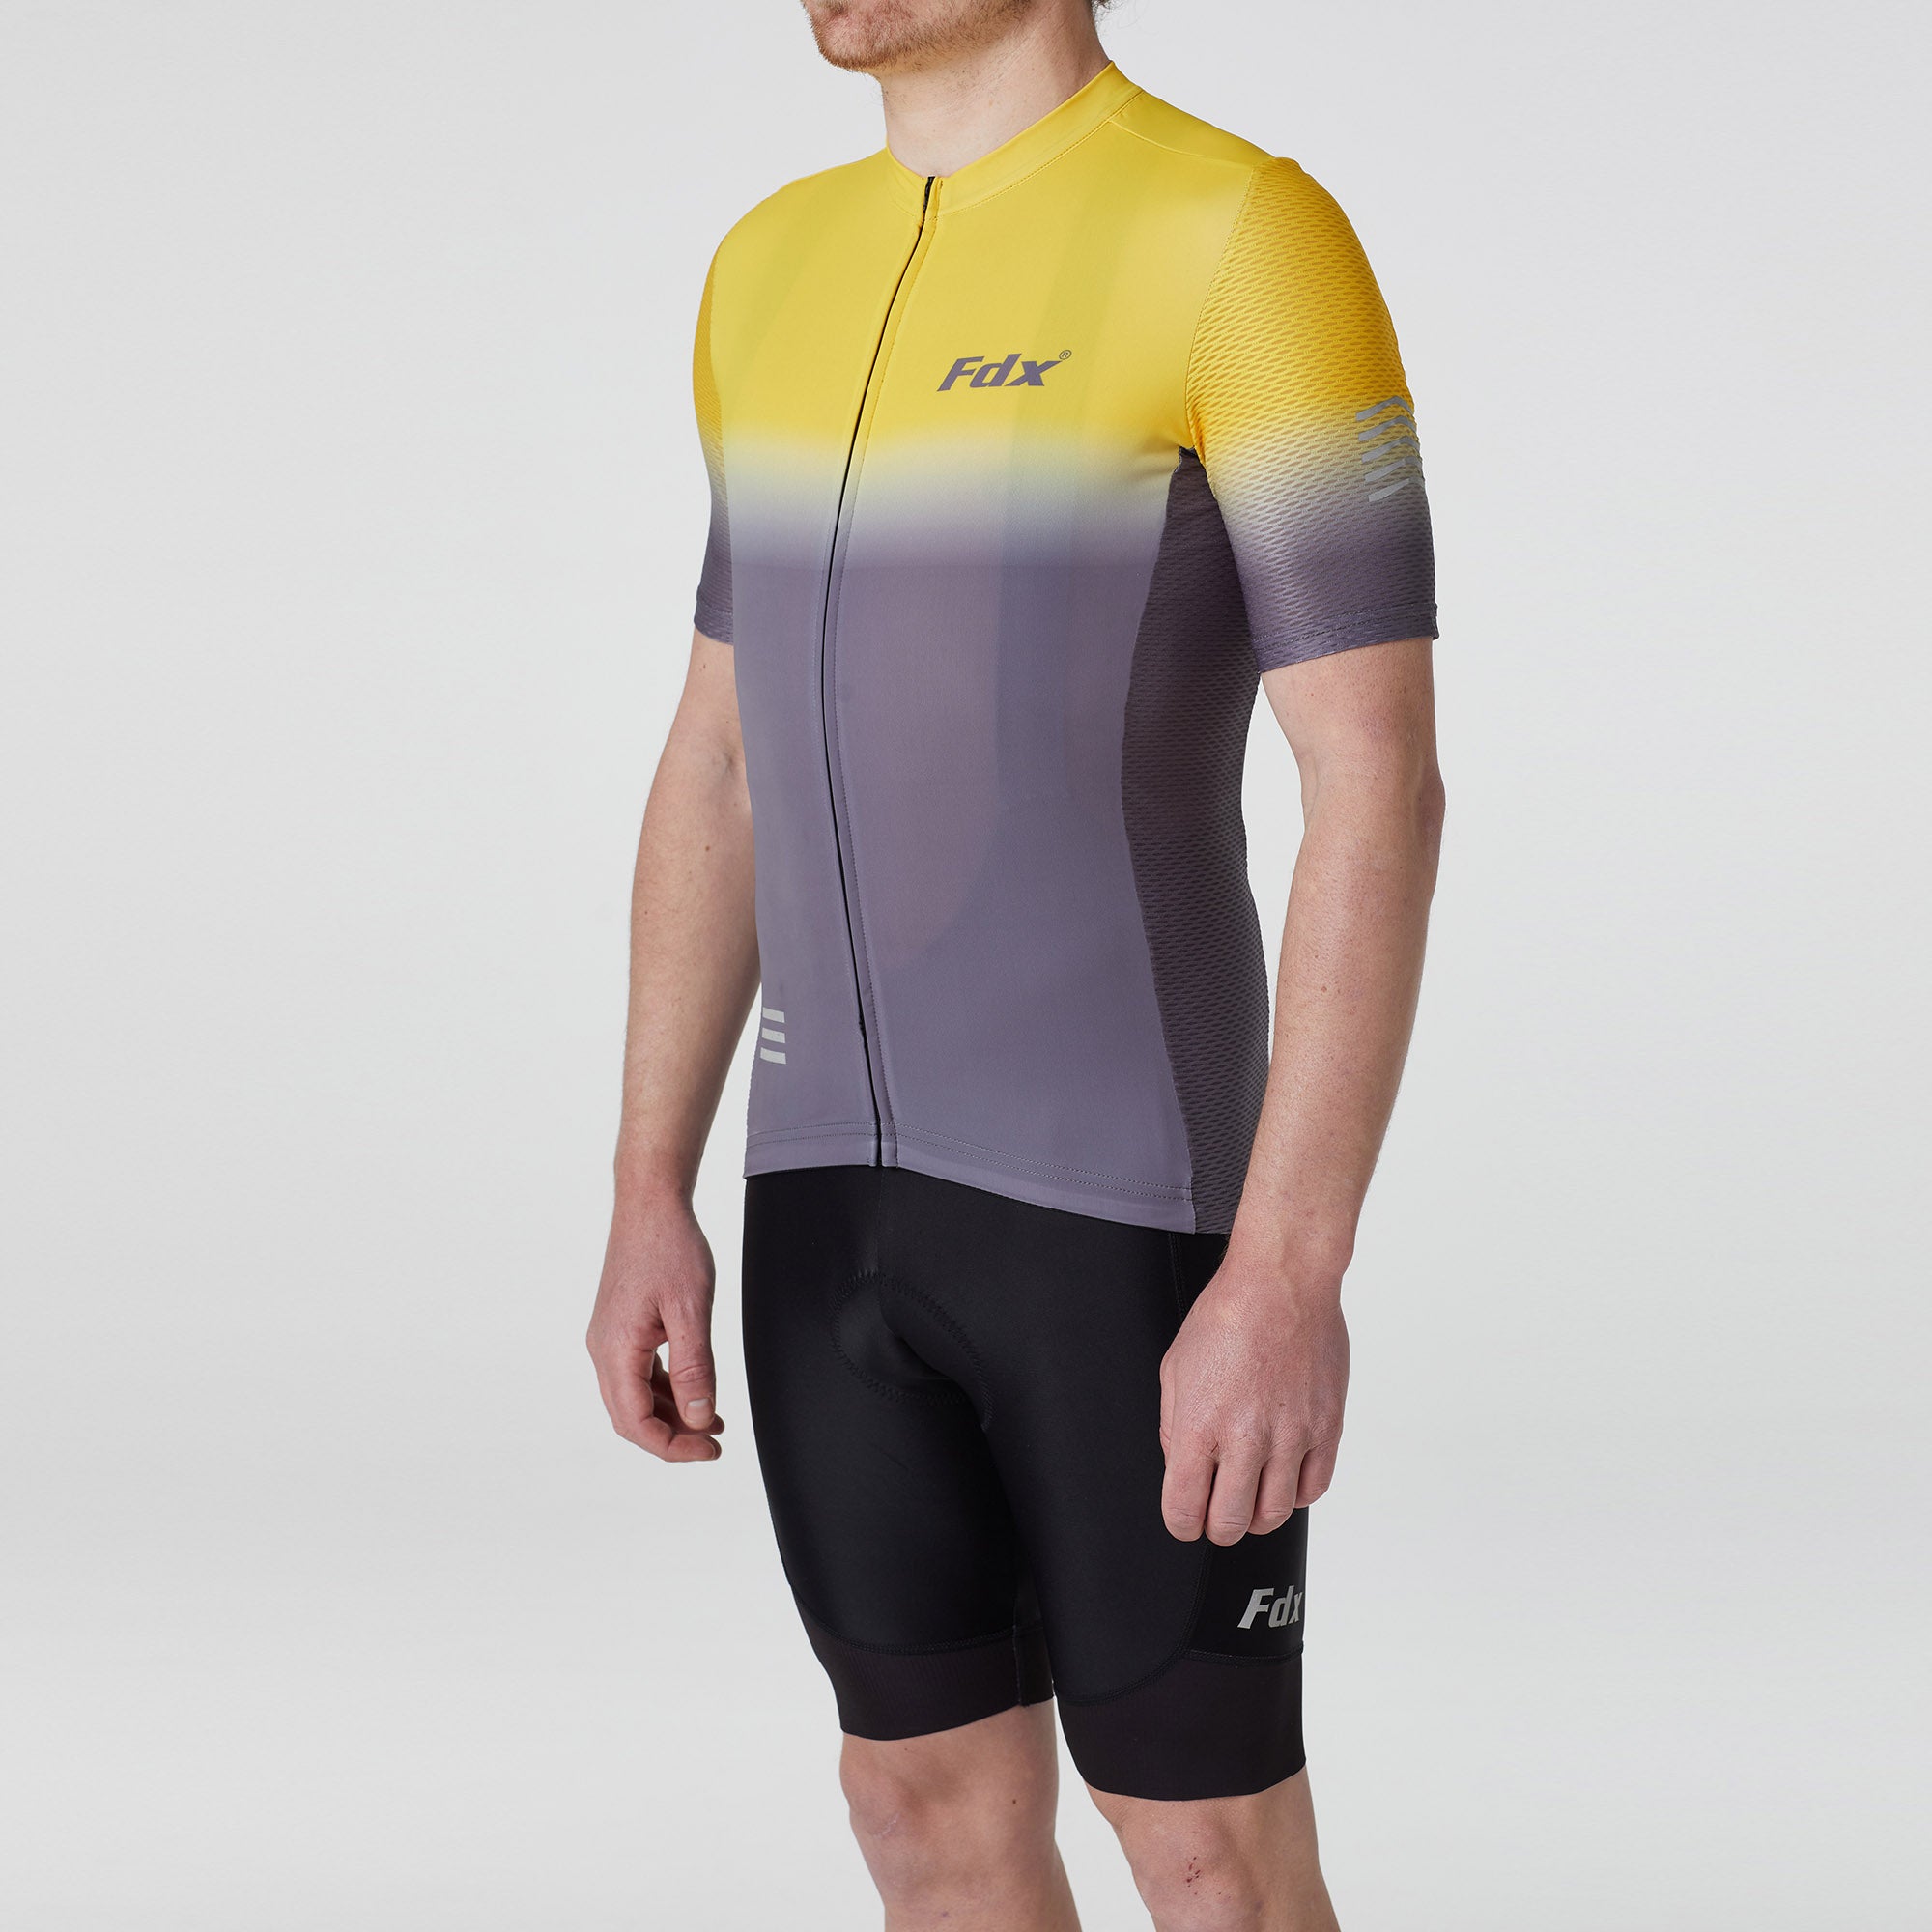 Fdx Mens Yellow & Grey Short Sleeve Cycling Jersey & Gel Padded Bib Shorts Best Summer Road Bike Wear Light Weight, Hi-viz Reflectors & Pockets - Duo